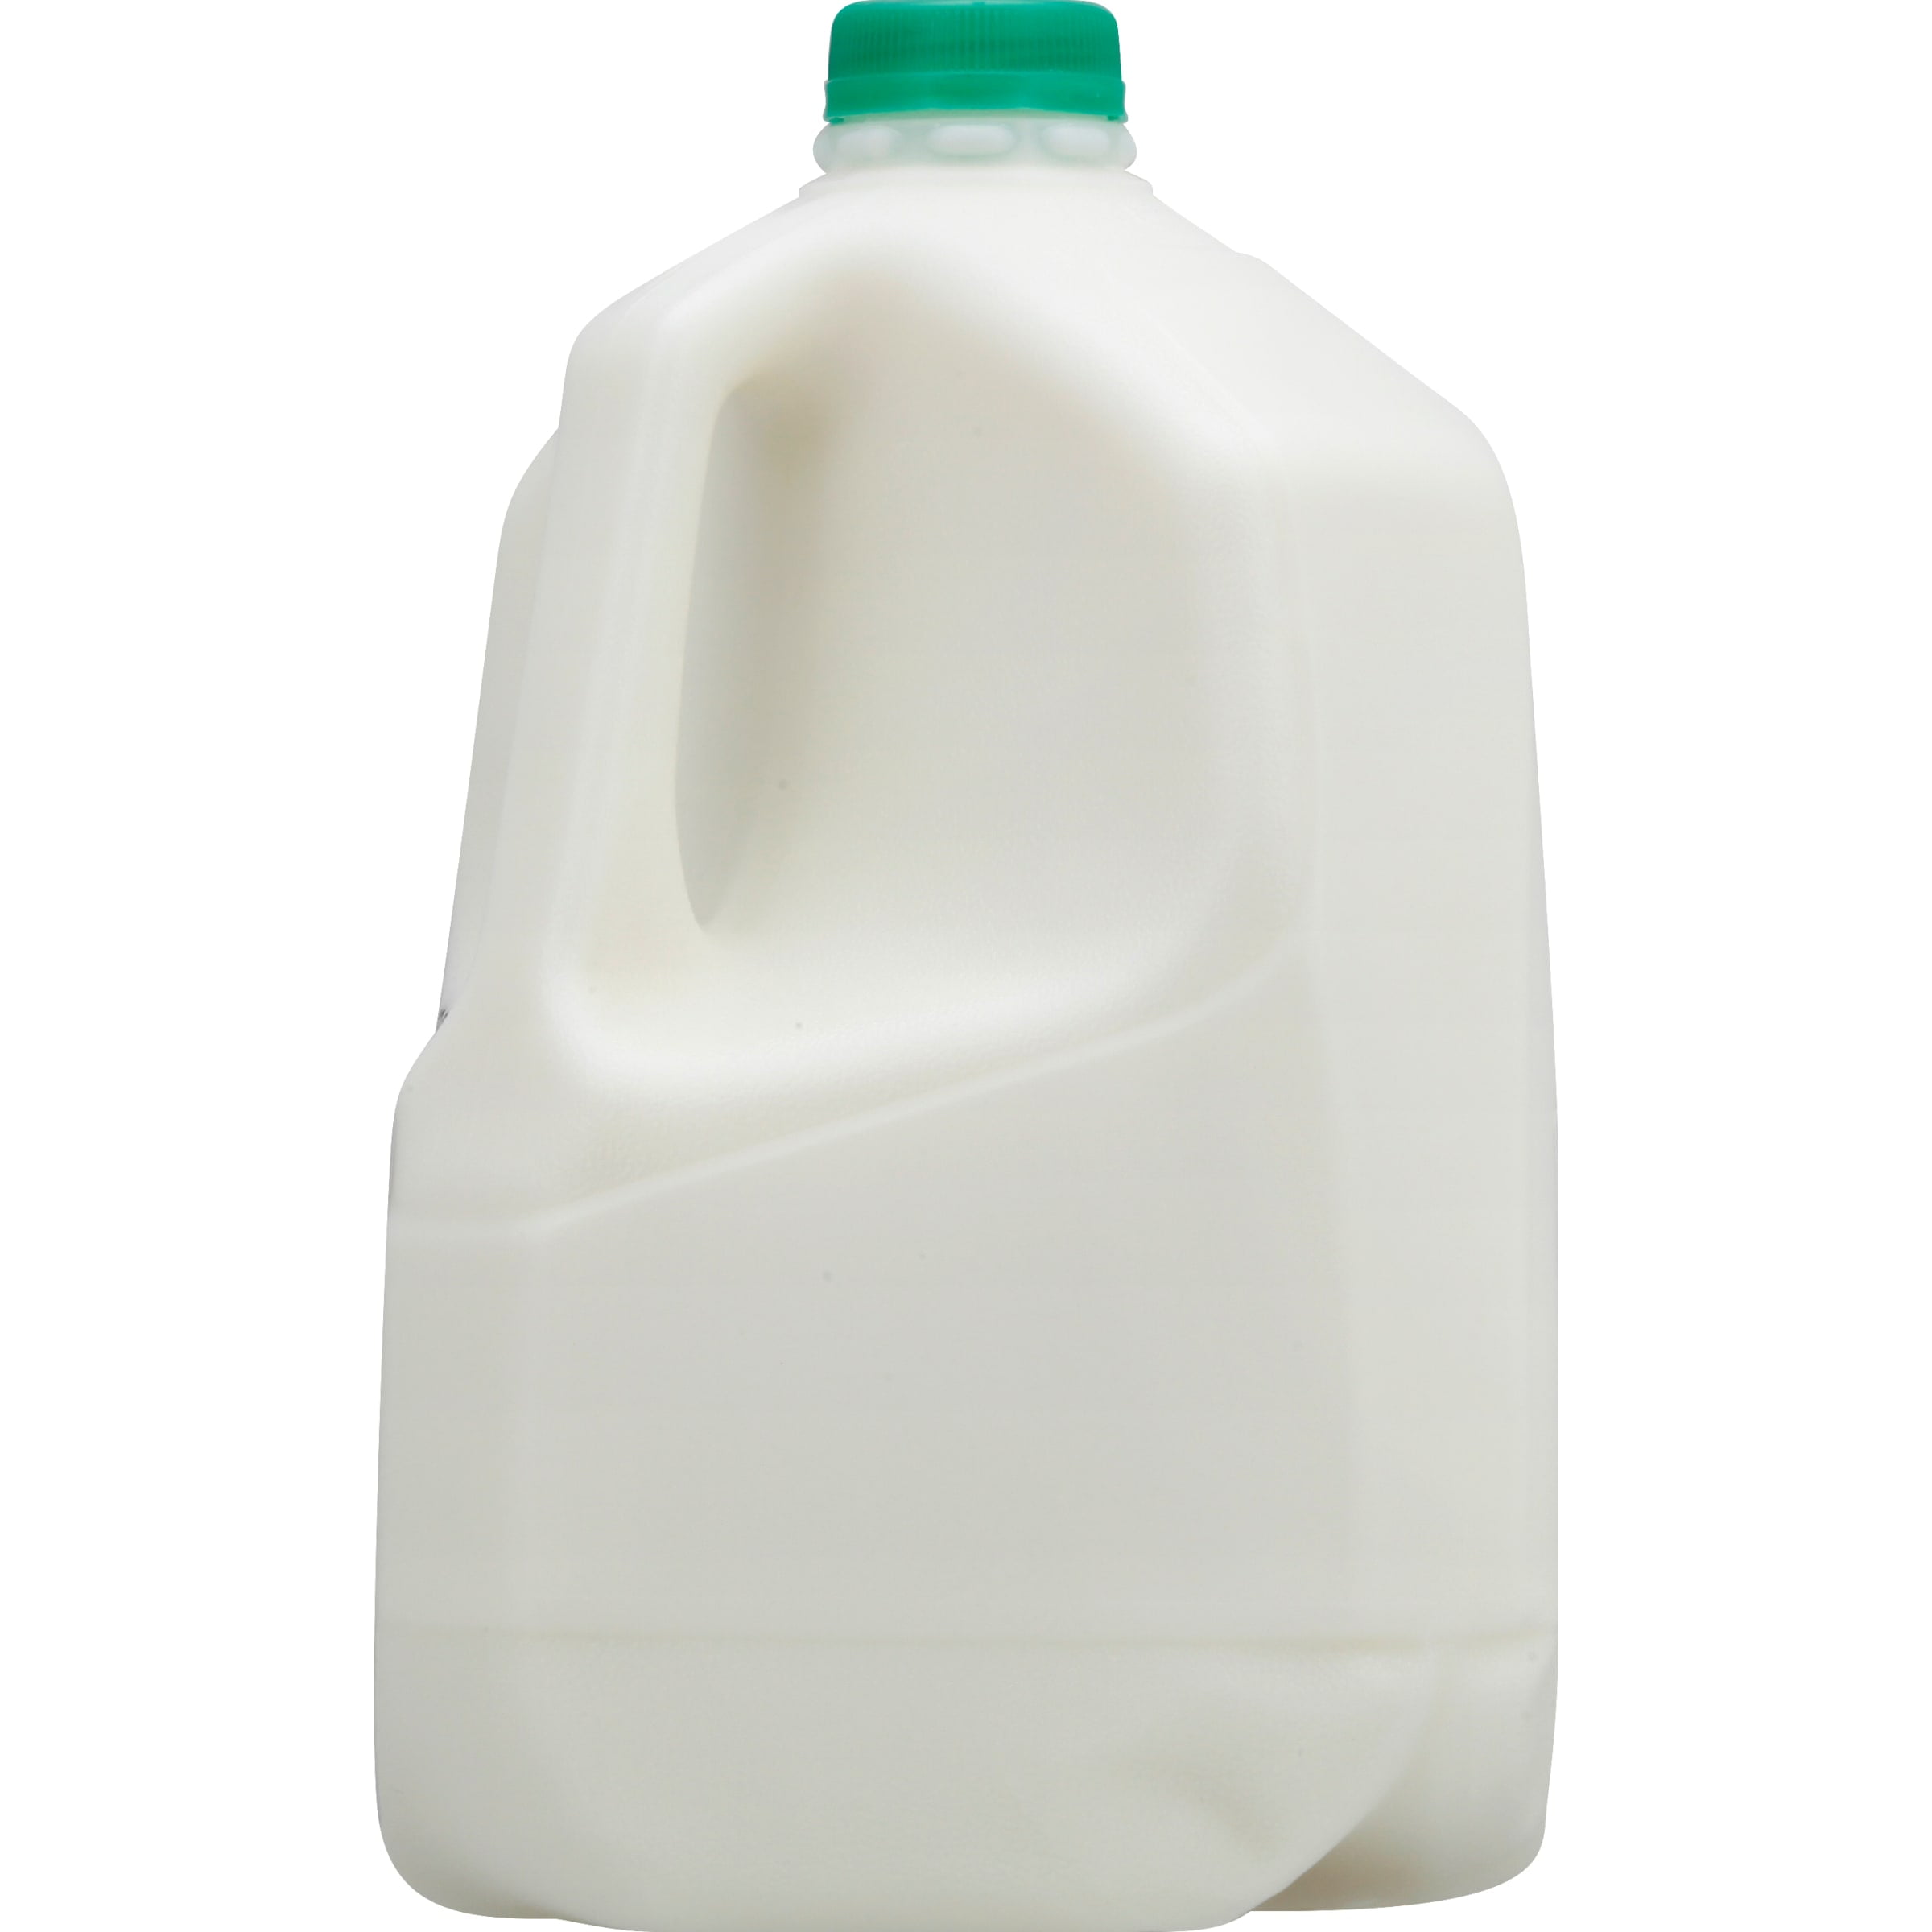 1% Lowfat Milk Plastic Half Gallon - Alta Dena® Dairy